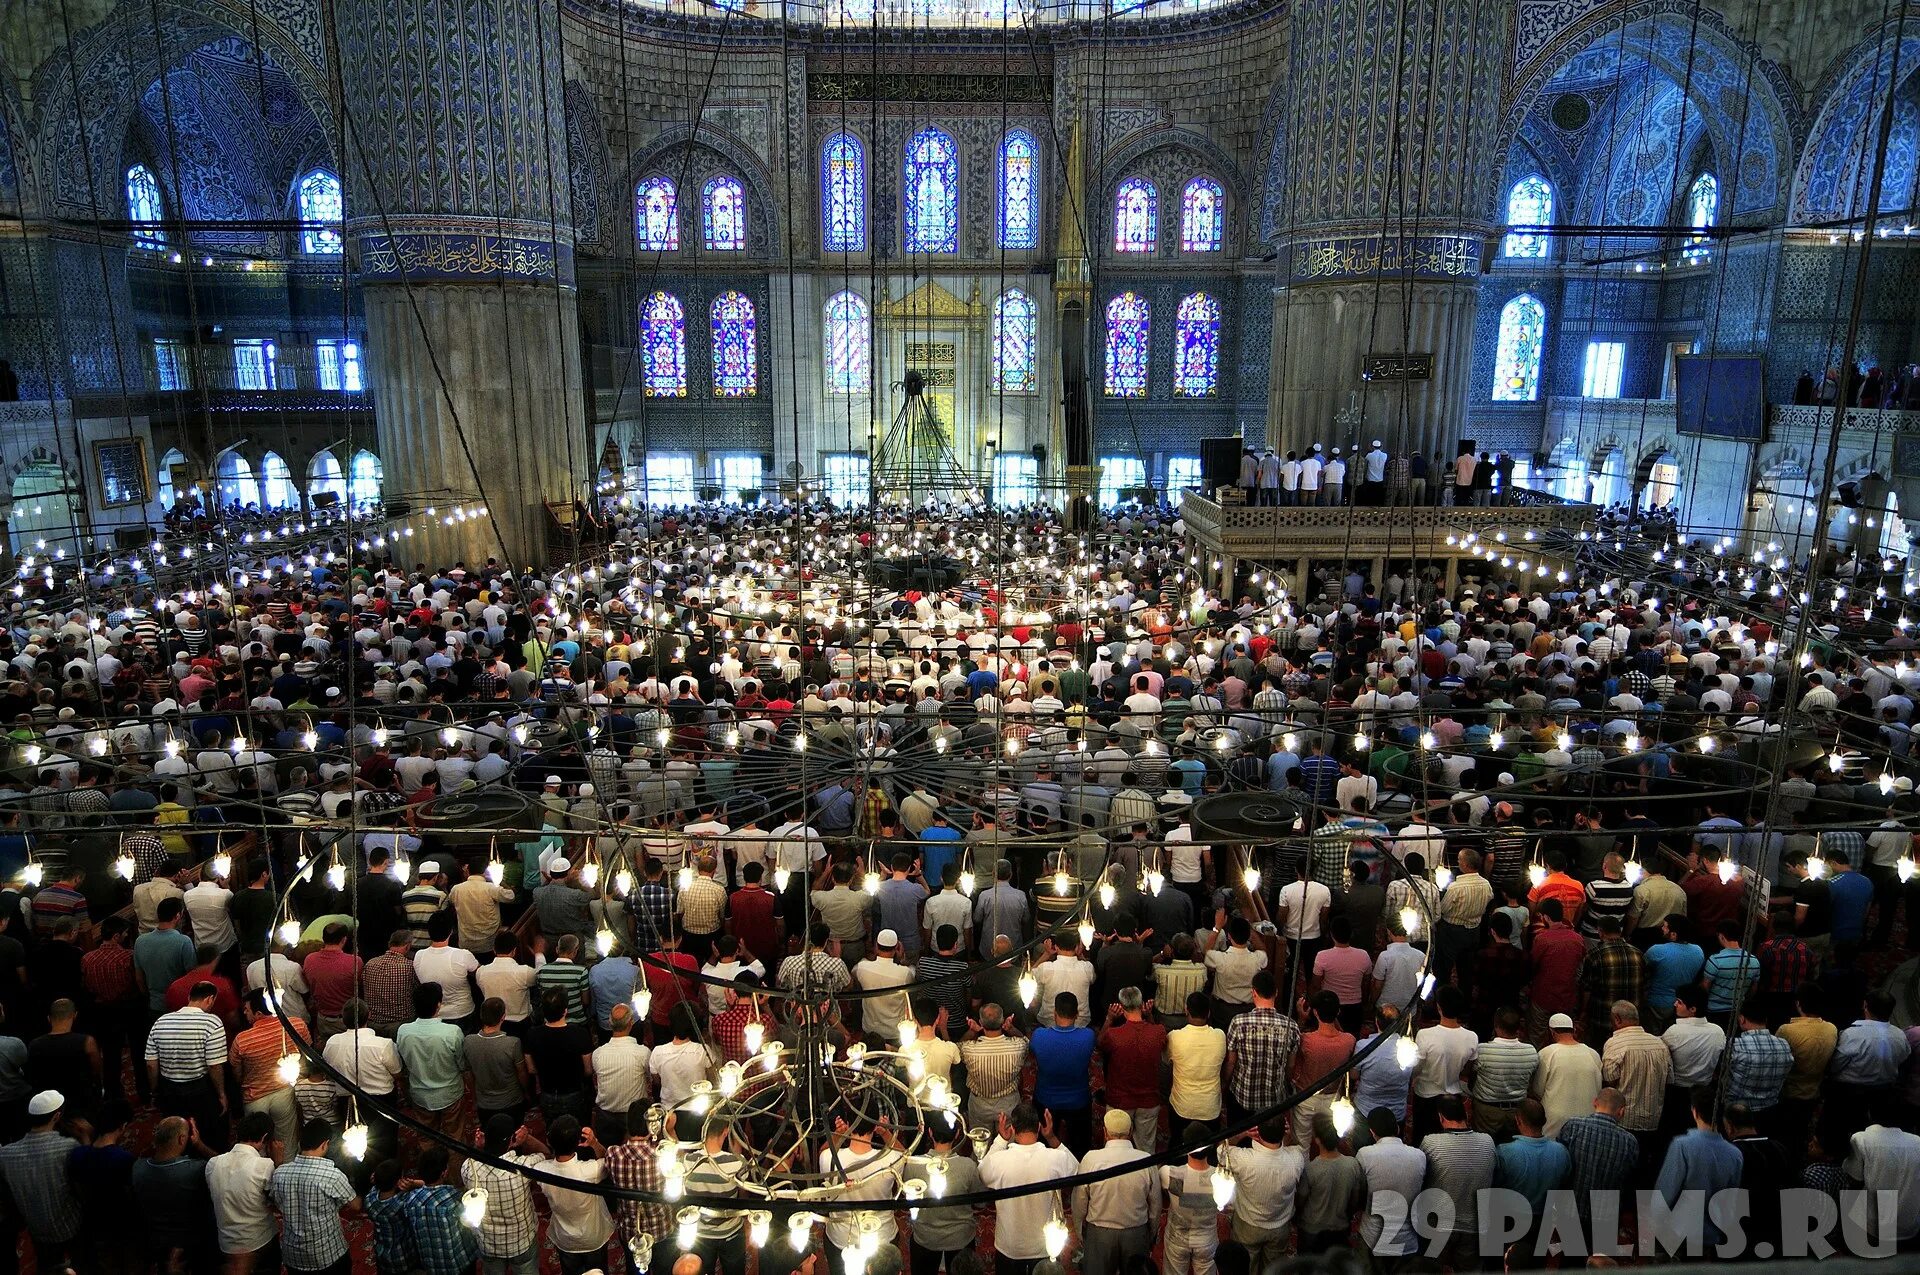 Мечеть Стамбул намаз. Молитва в мечети. Ураза байрам. Намаз в голубой мечети Стамбул.